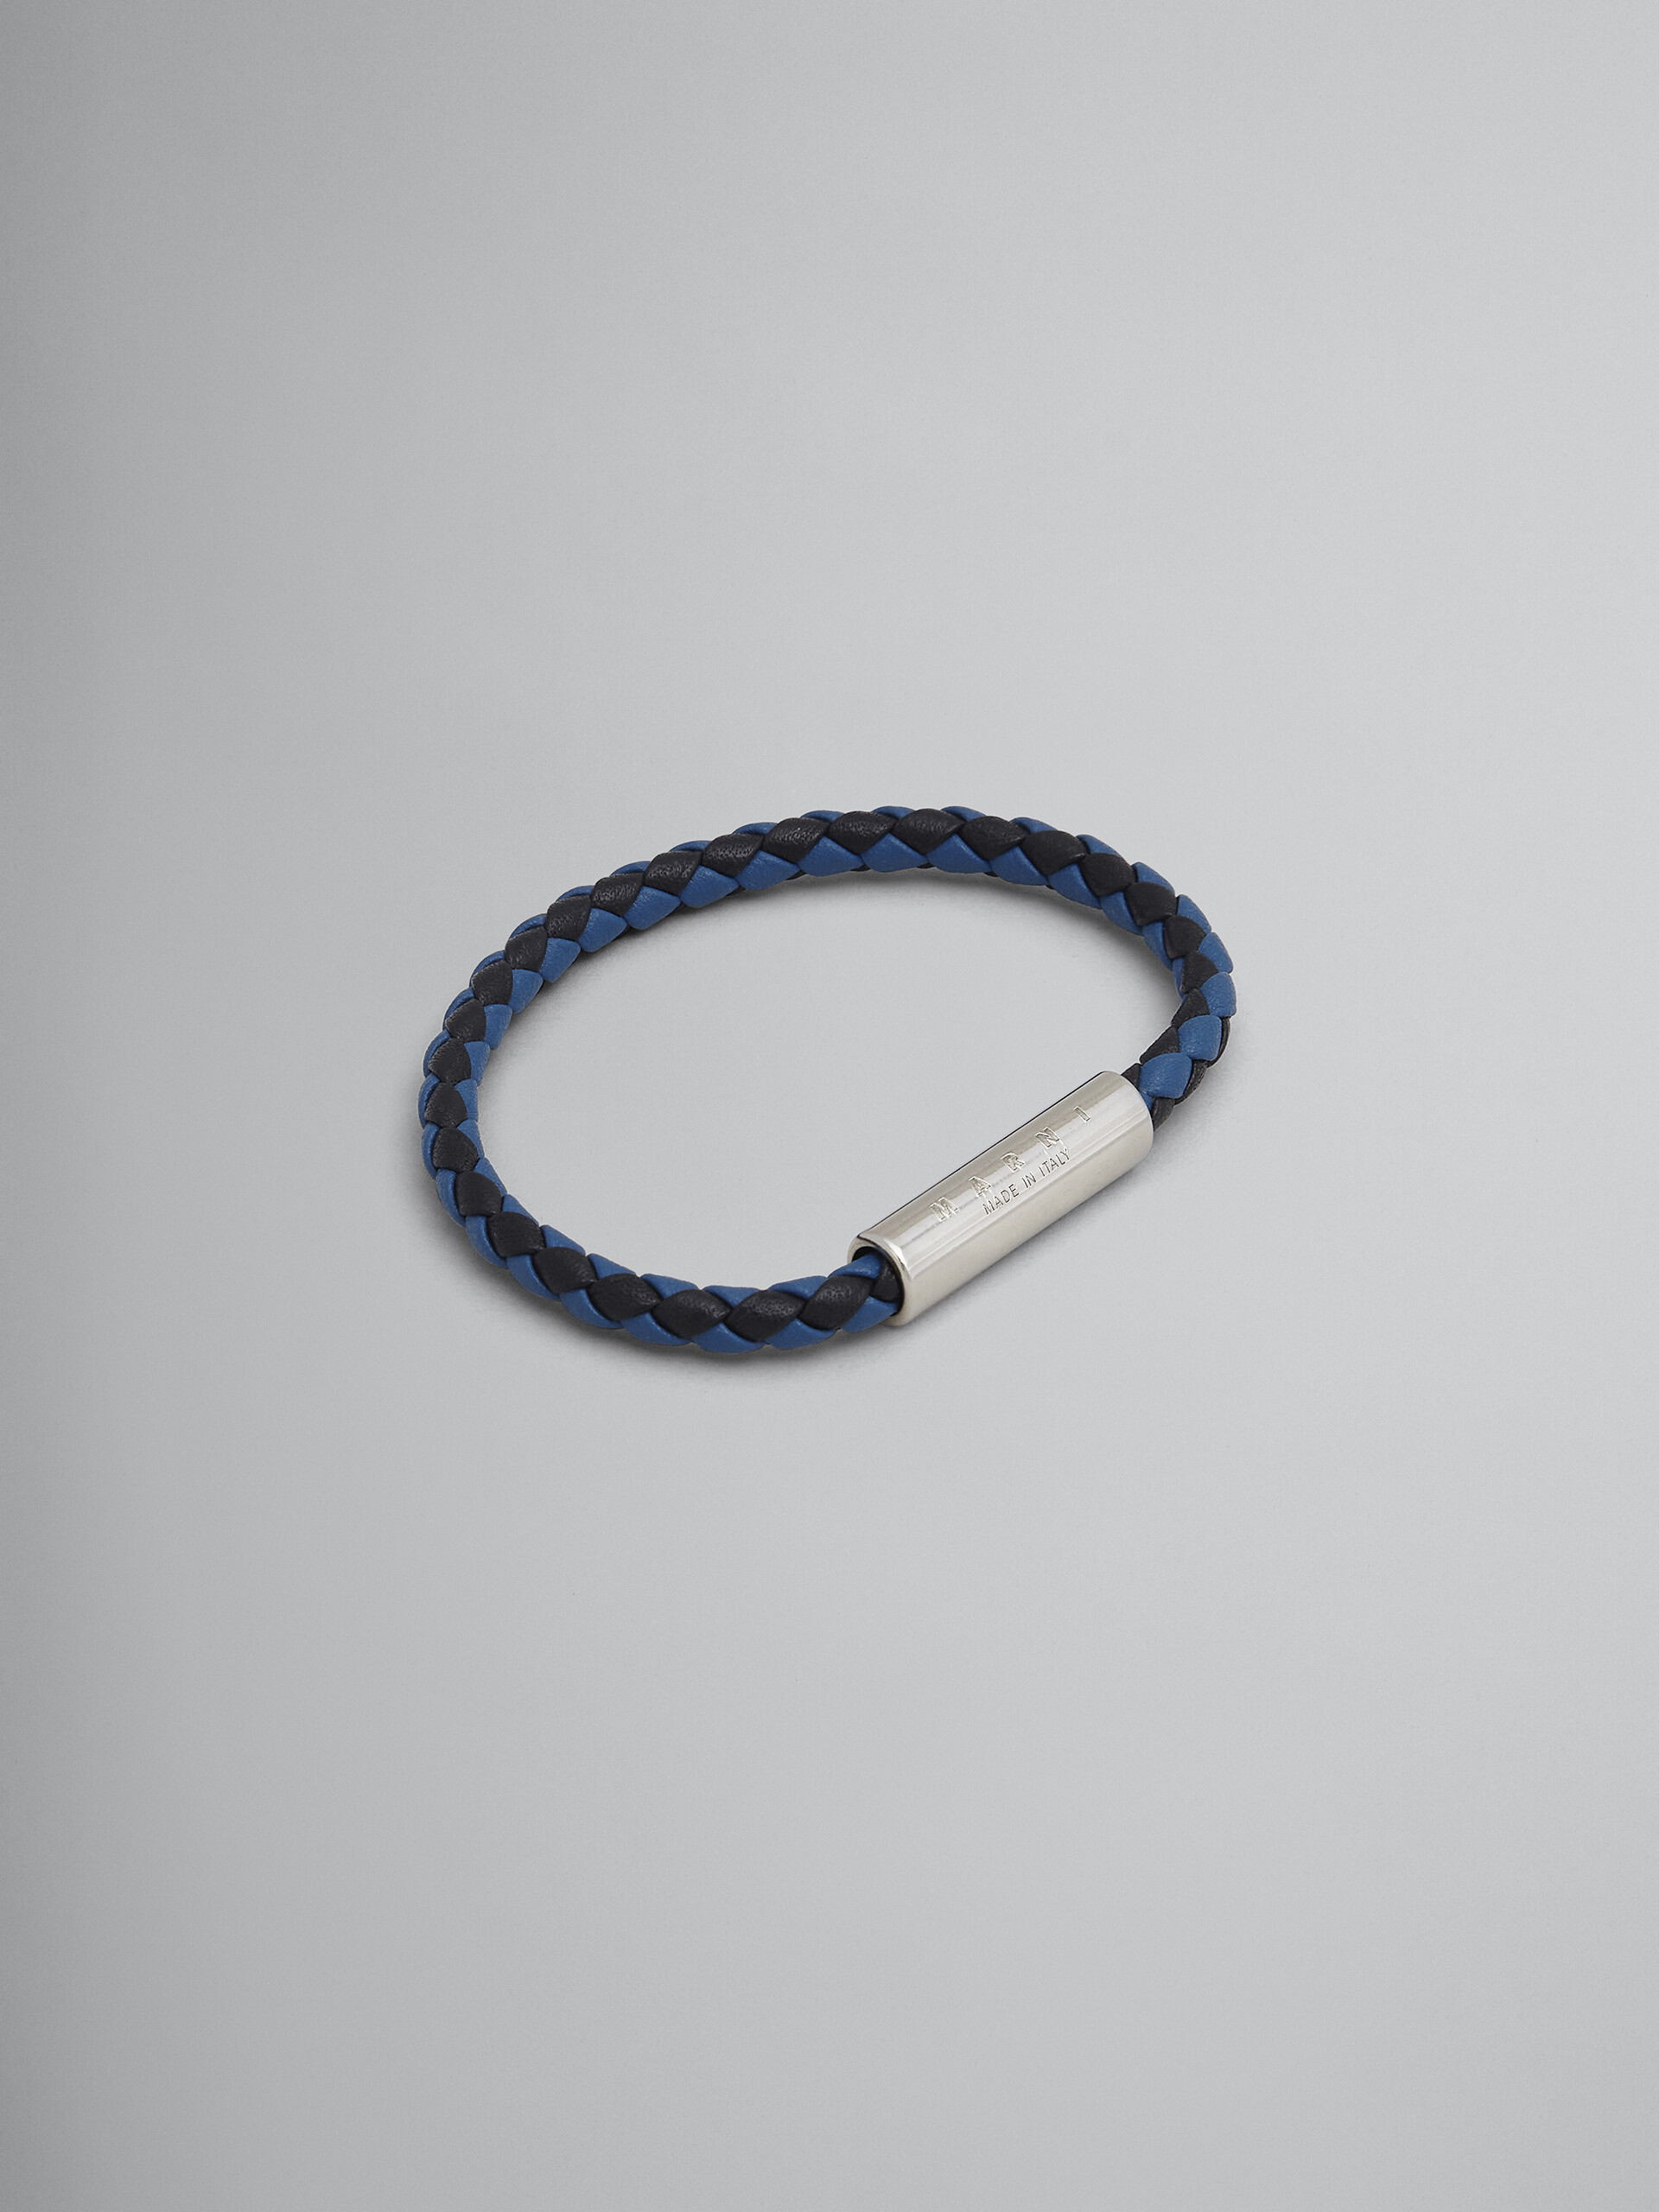 Black and blue braided leather bracelet - Bracelets - Image 1